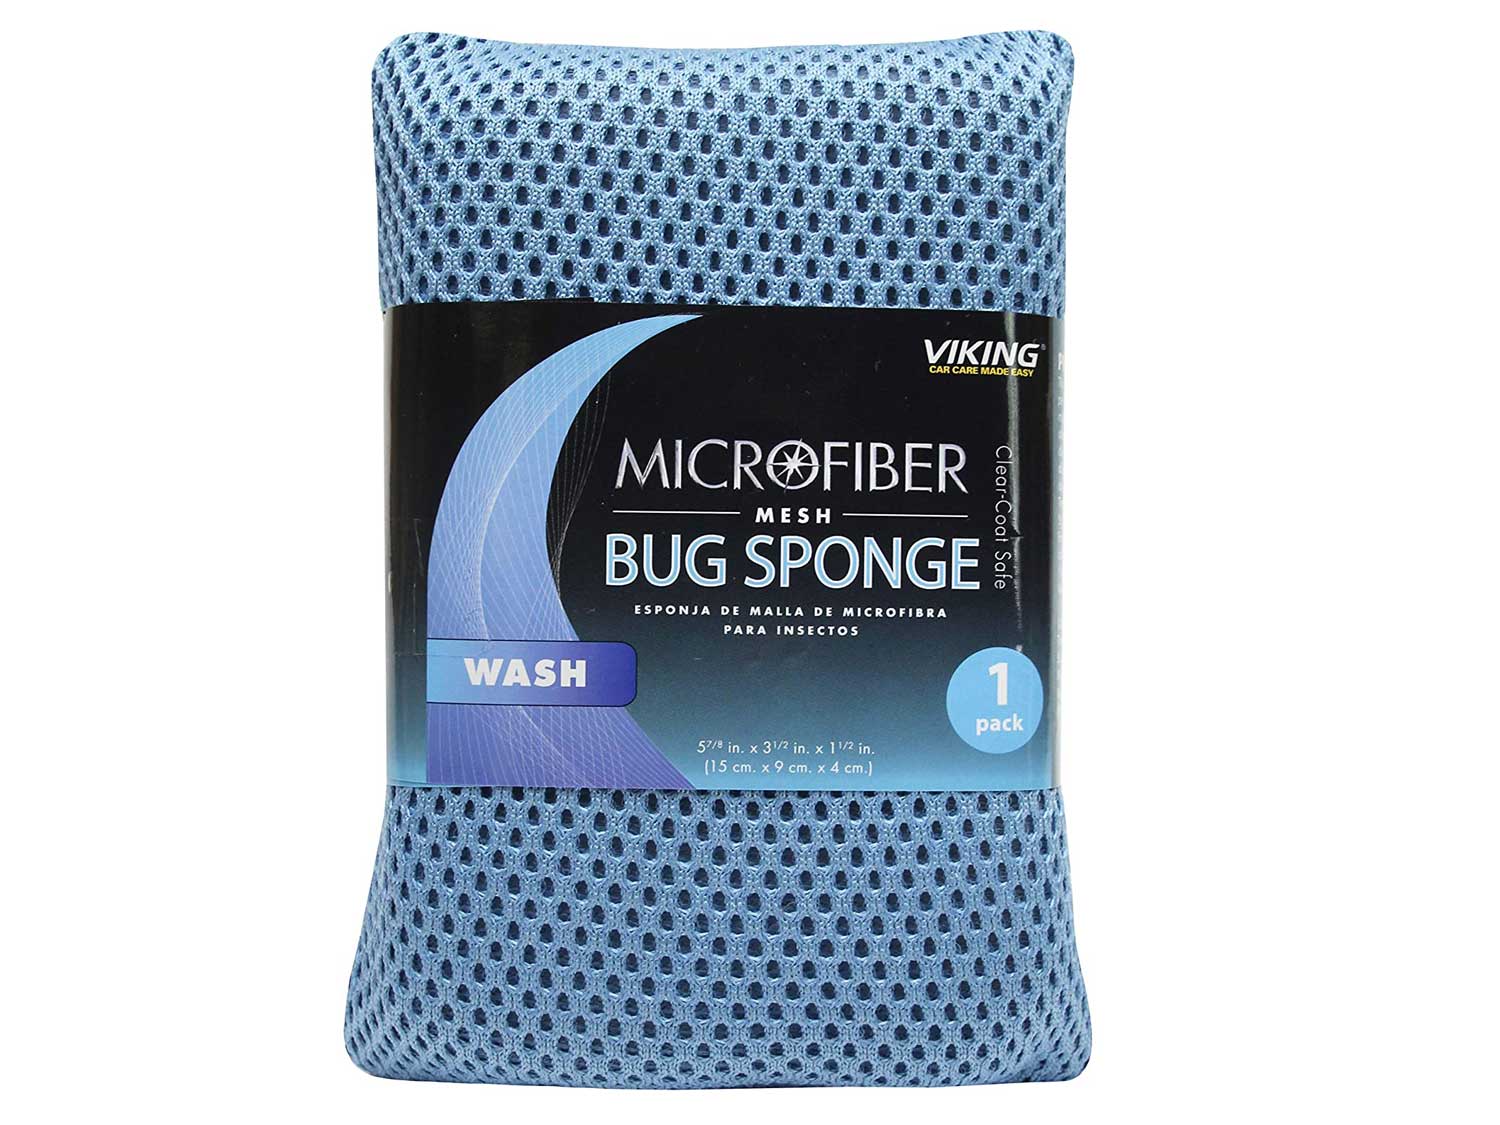 VIKING Mesh Bug Sponge Cleaning Wash Sponge